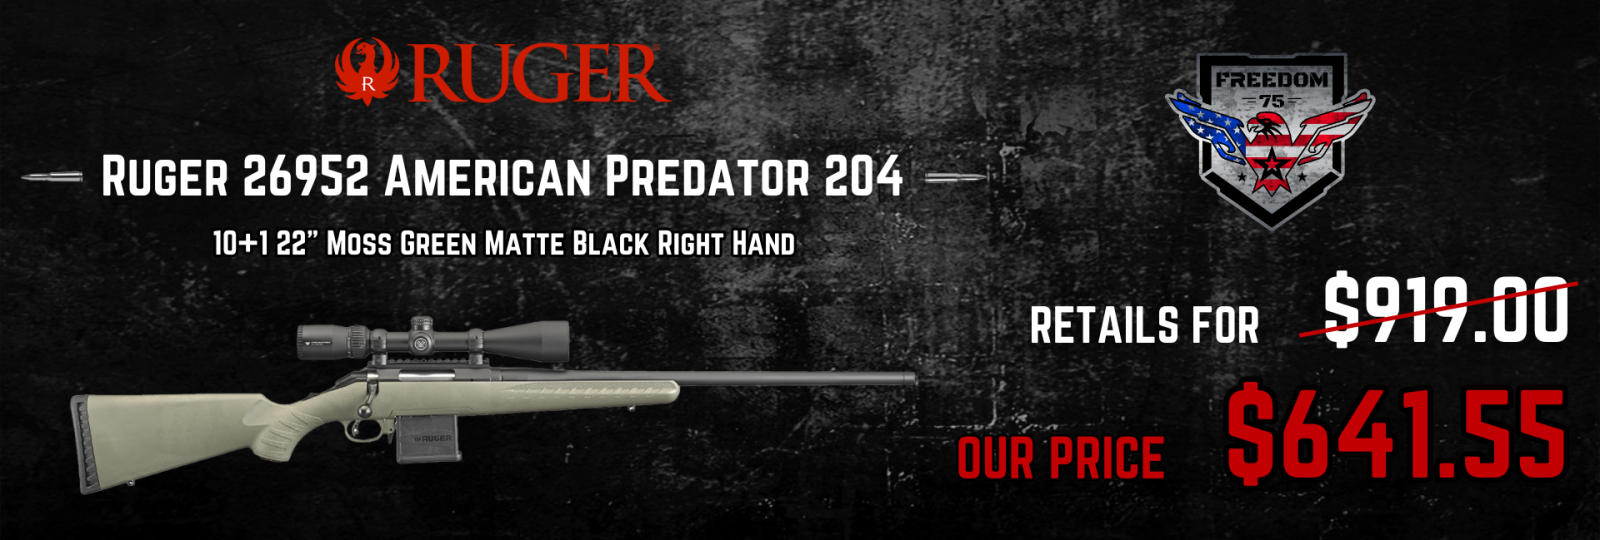 Ruger 26952 American Predator 204 Ruger 10+1 22" Moss Green Matte Black Right Hand